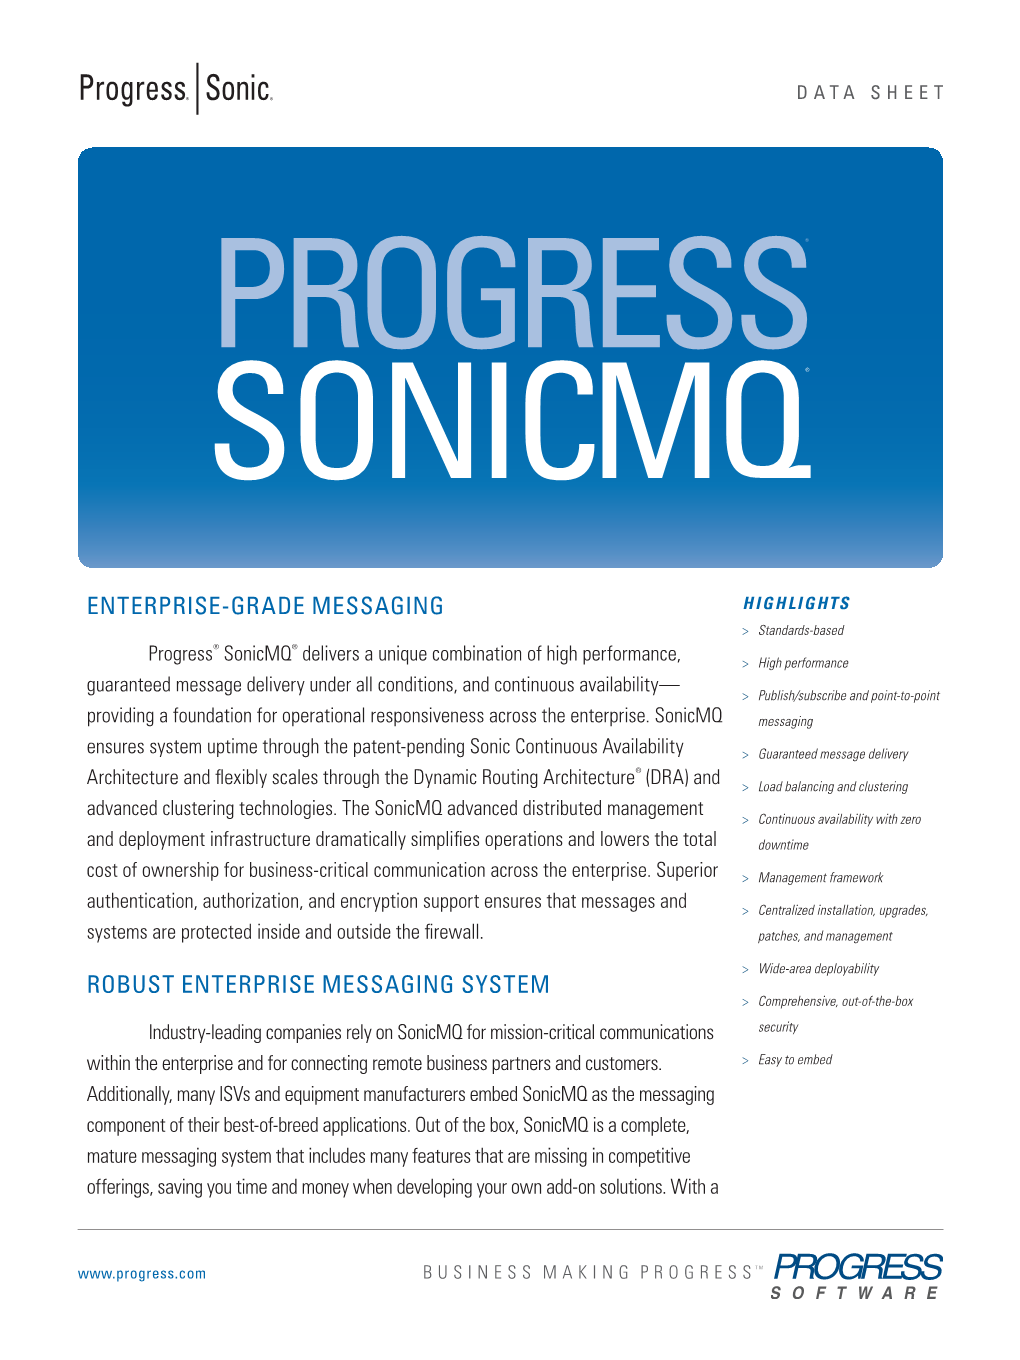 Progress Actional Progress Sonic Progress Apama